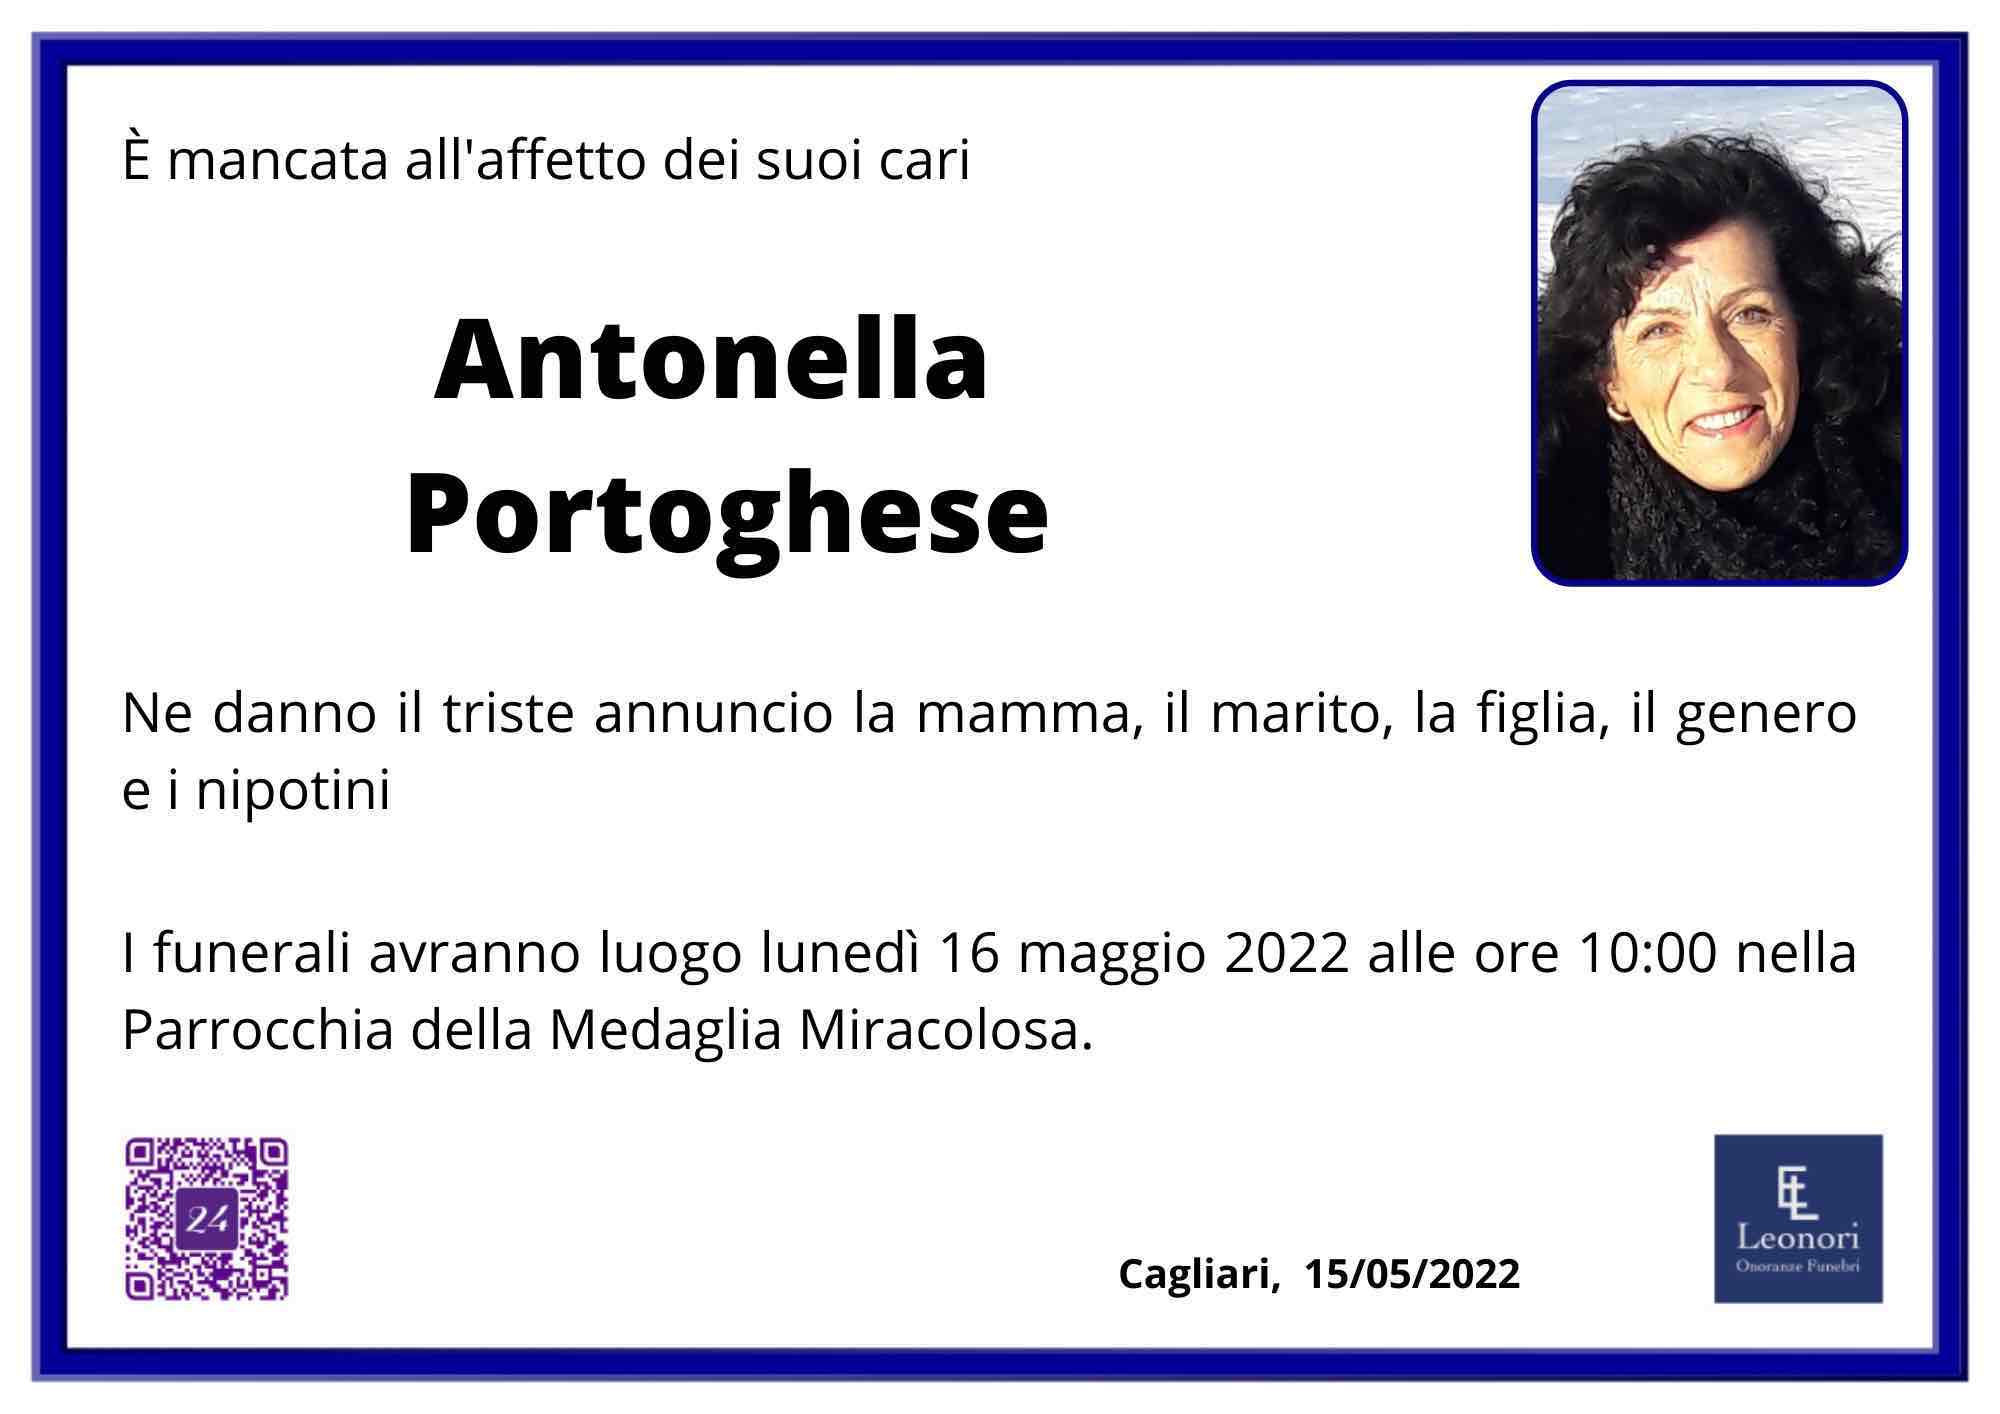 Antonella Portoghese